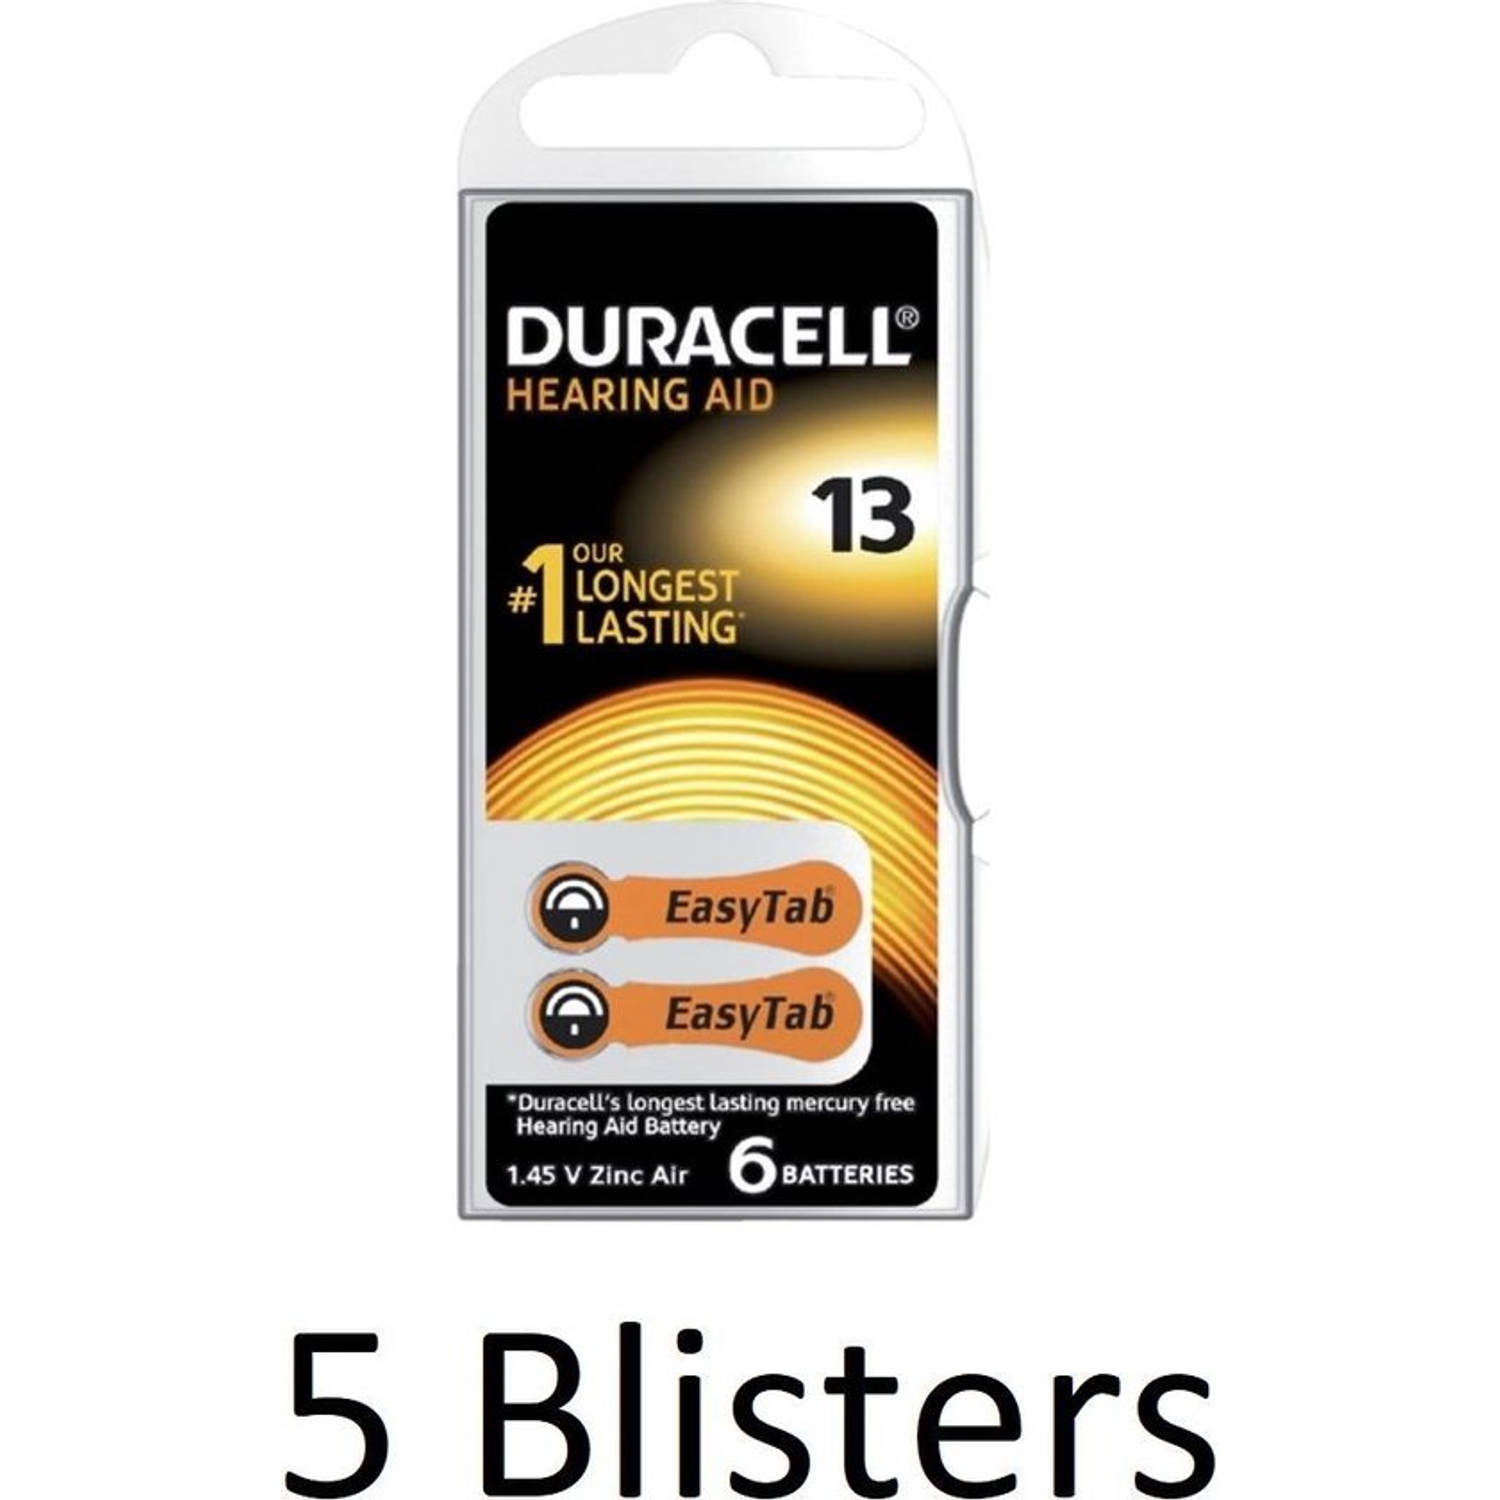 30 Stuks (5 Blisters a 6 st) duracell Batterij da13 hearing aid